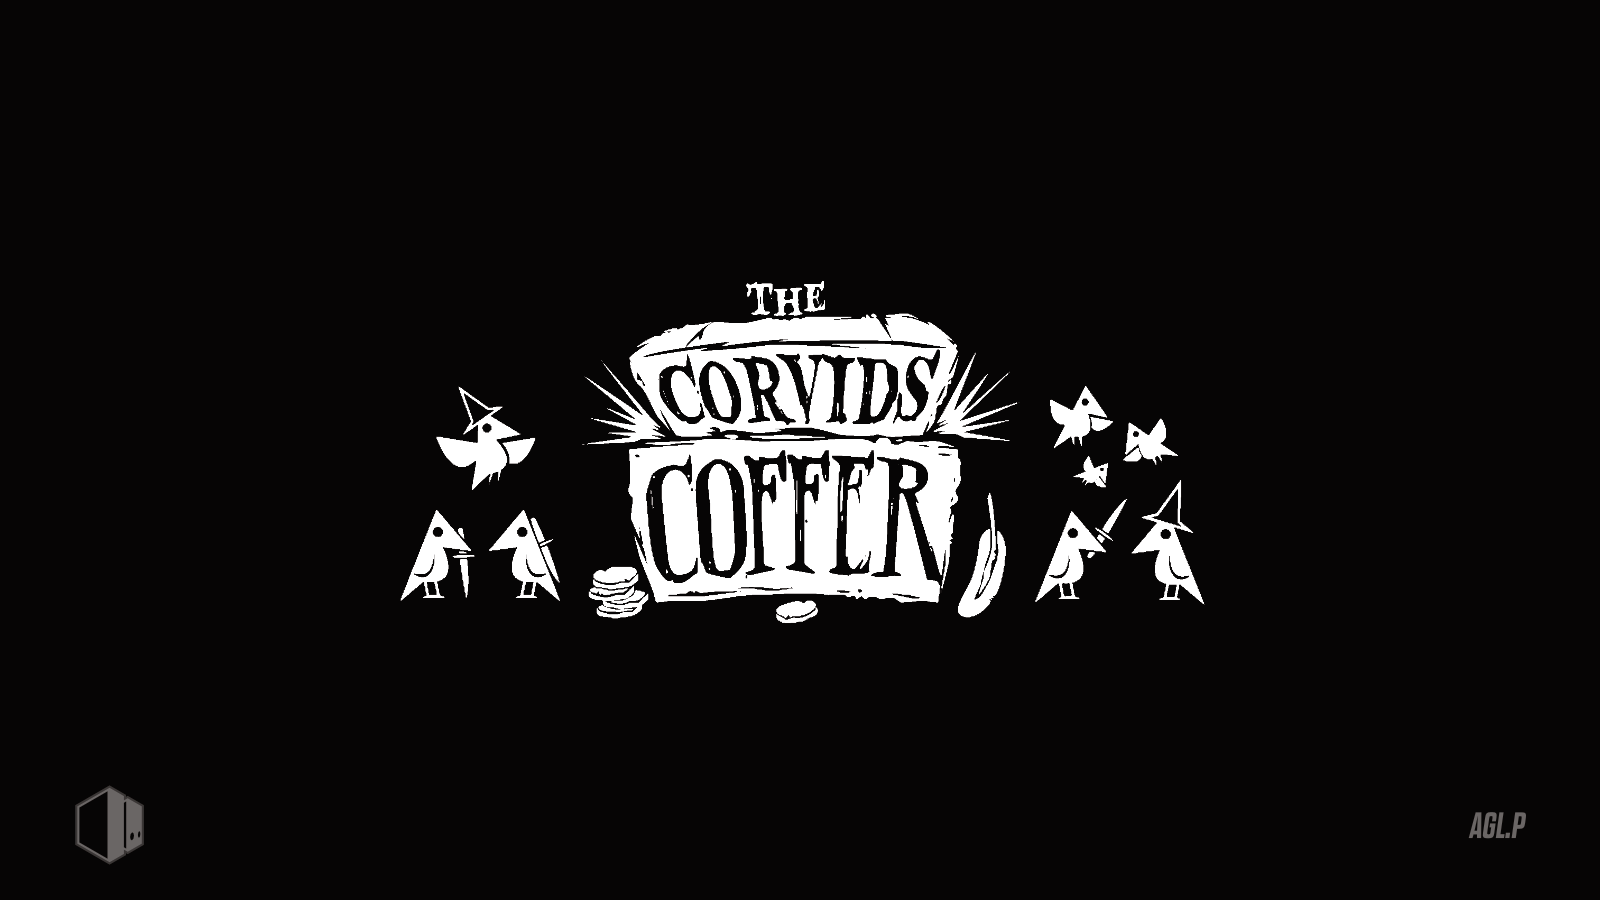 The Corvids Coffer | Gordy H | Gordy H